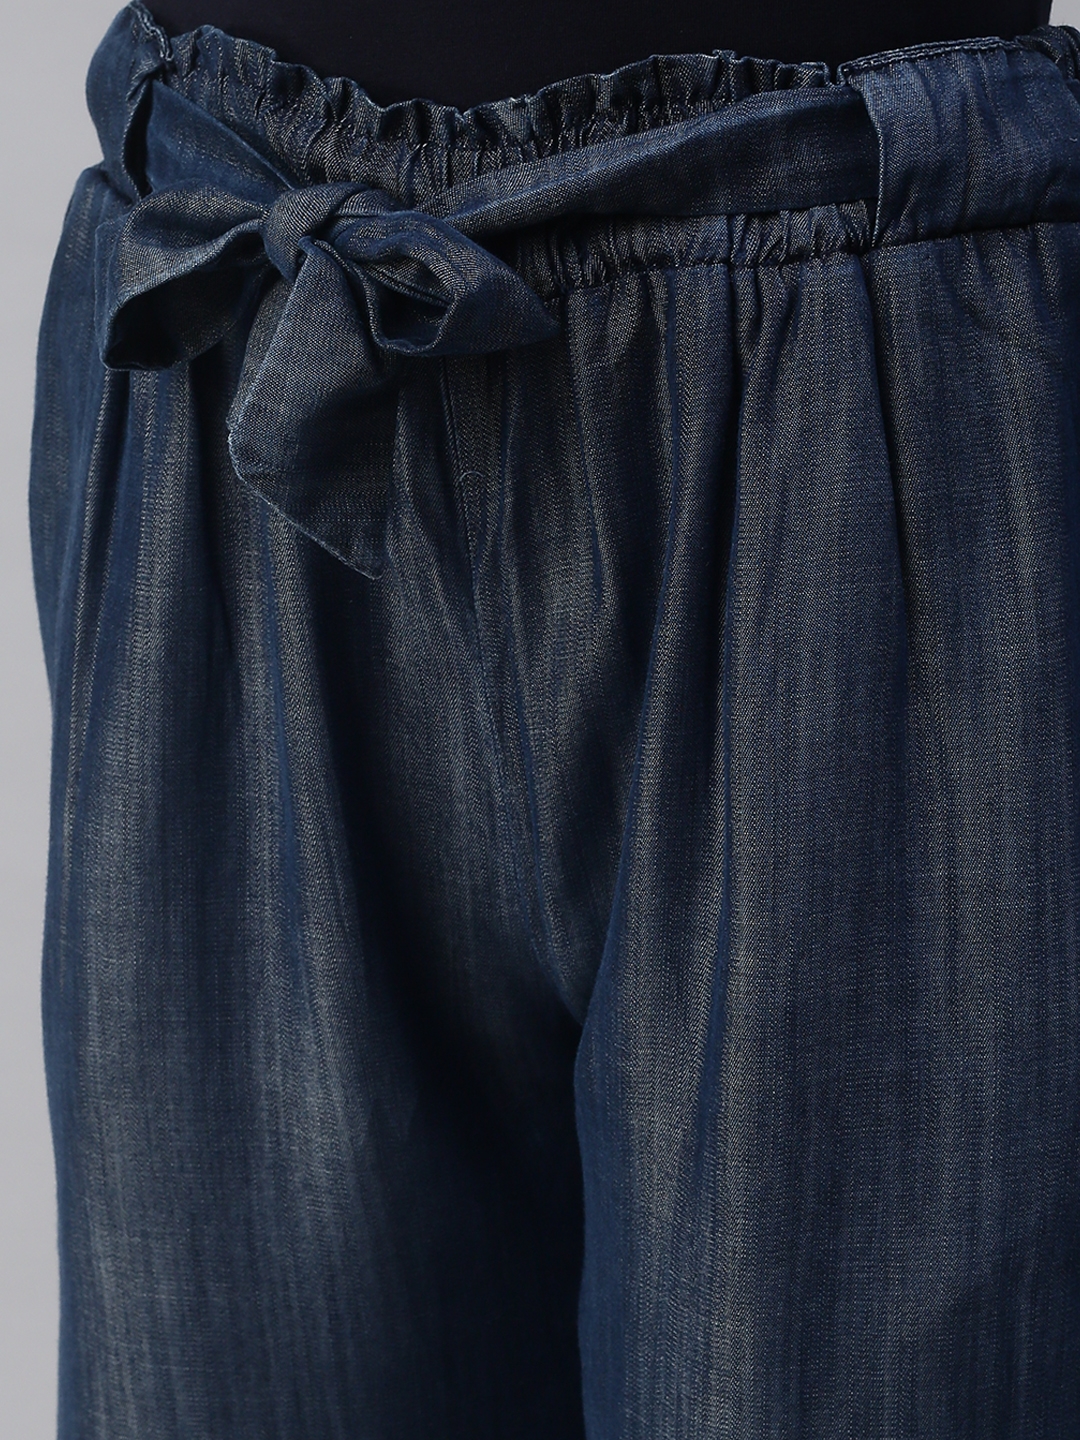 Women's Blue Denim Solid Culottes